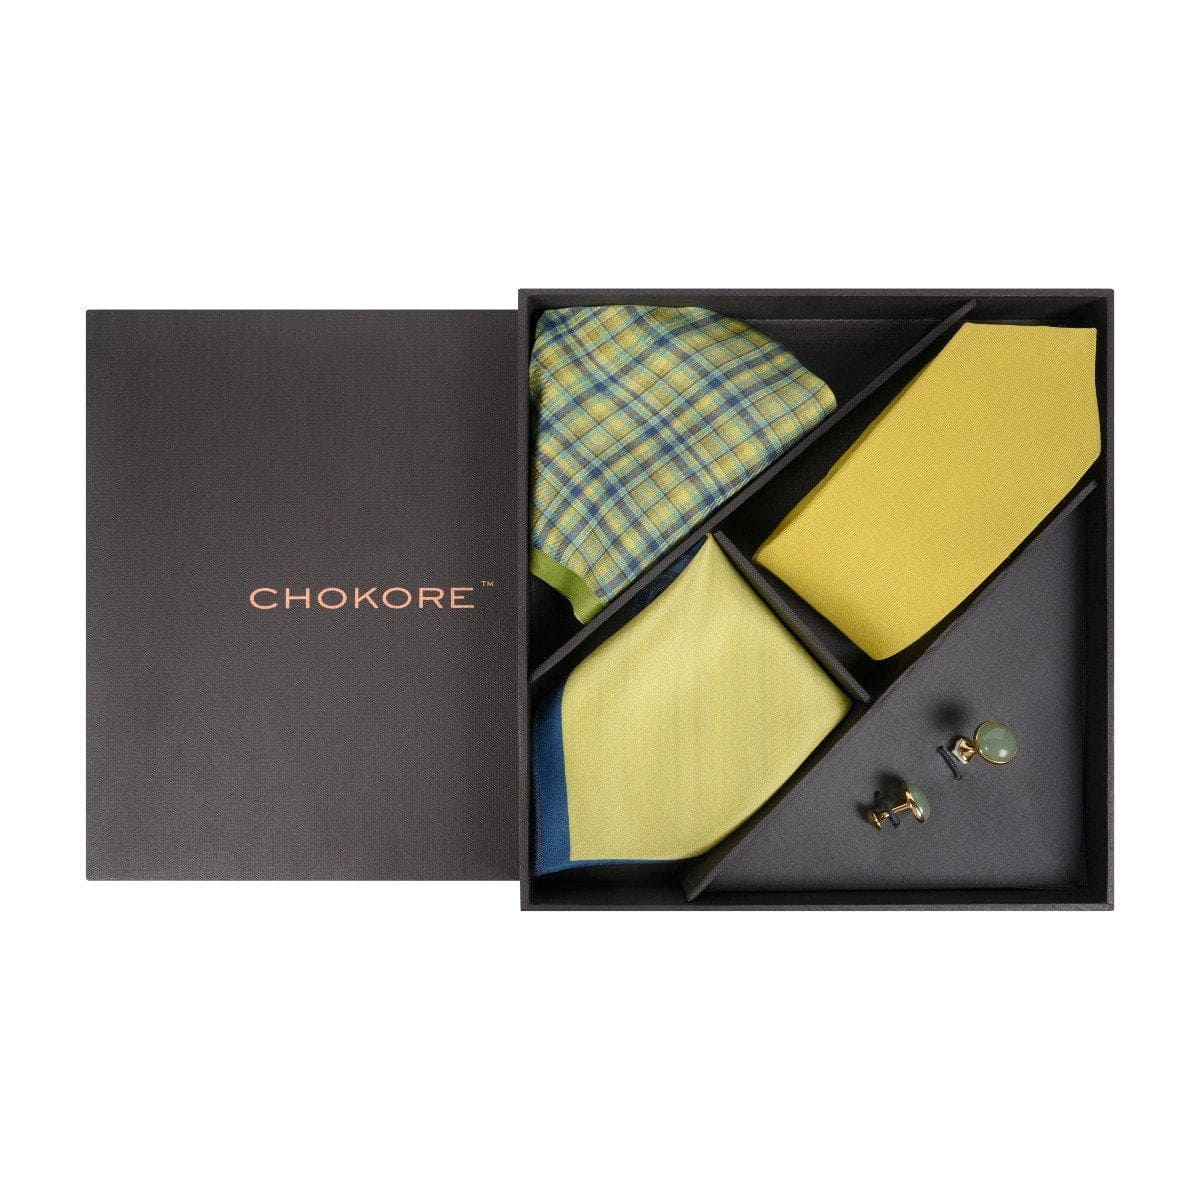 Chokore Four in one green colour gift set